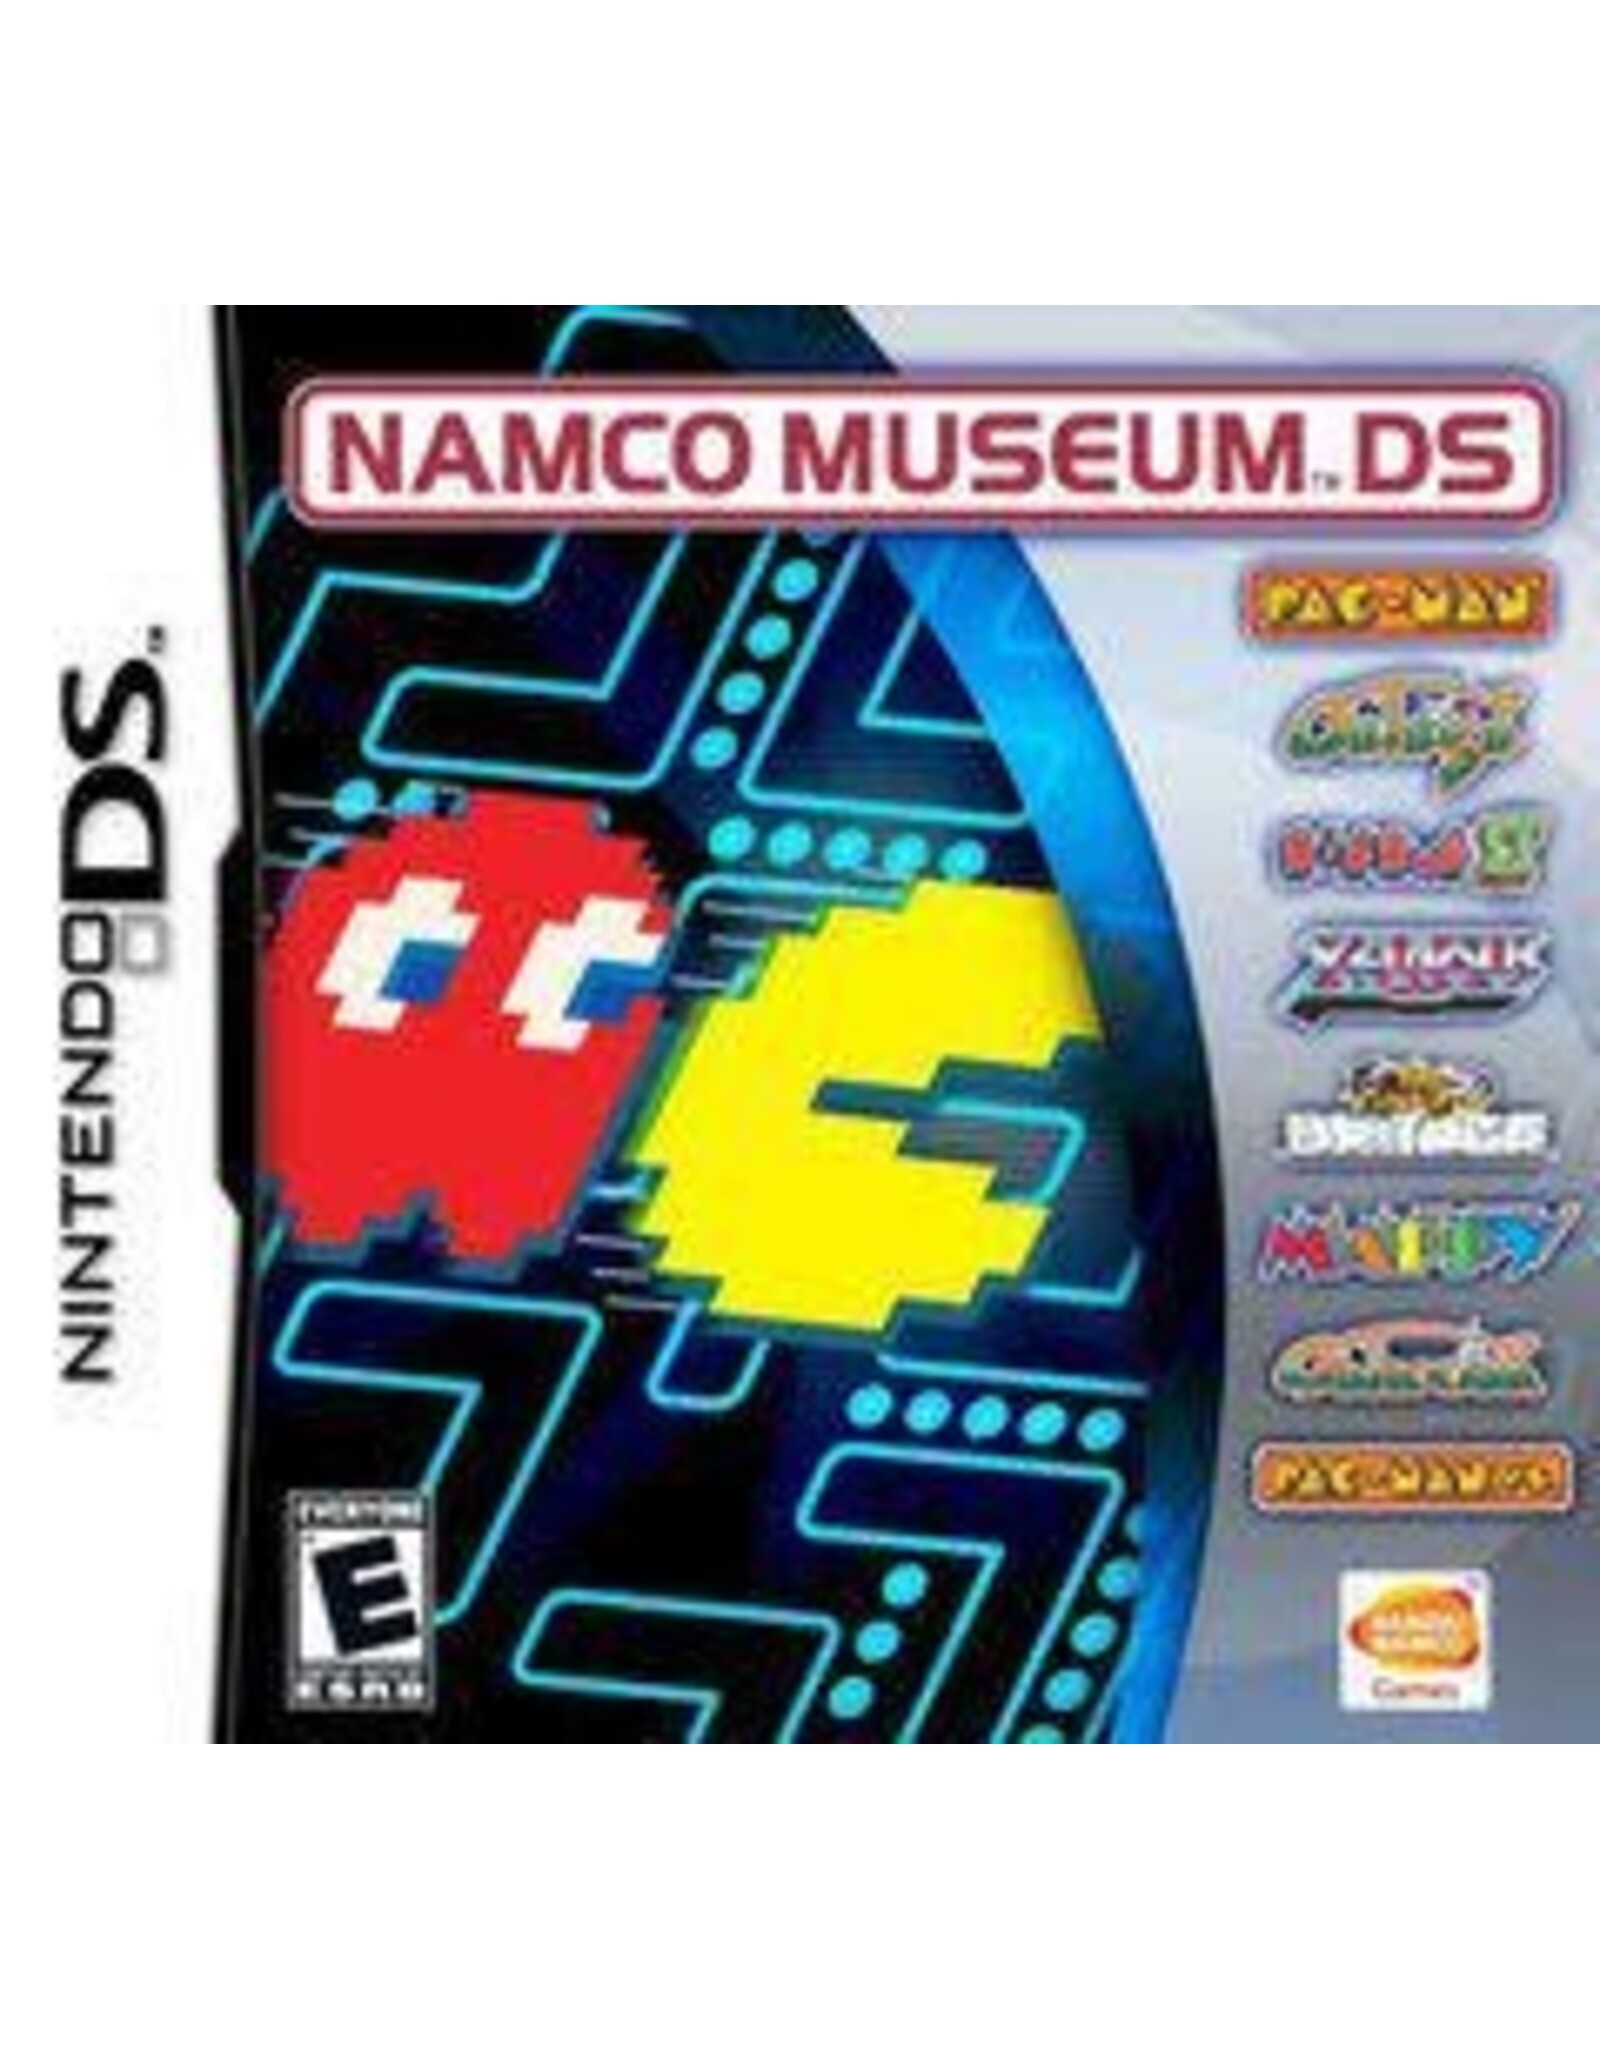 Nintendo DS Namco Museum DS (Brand New)